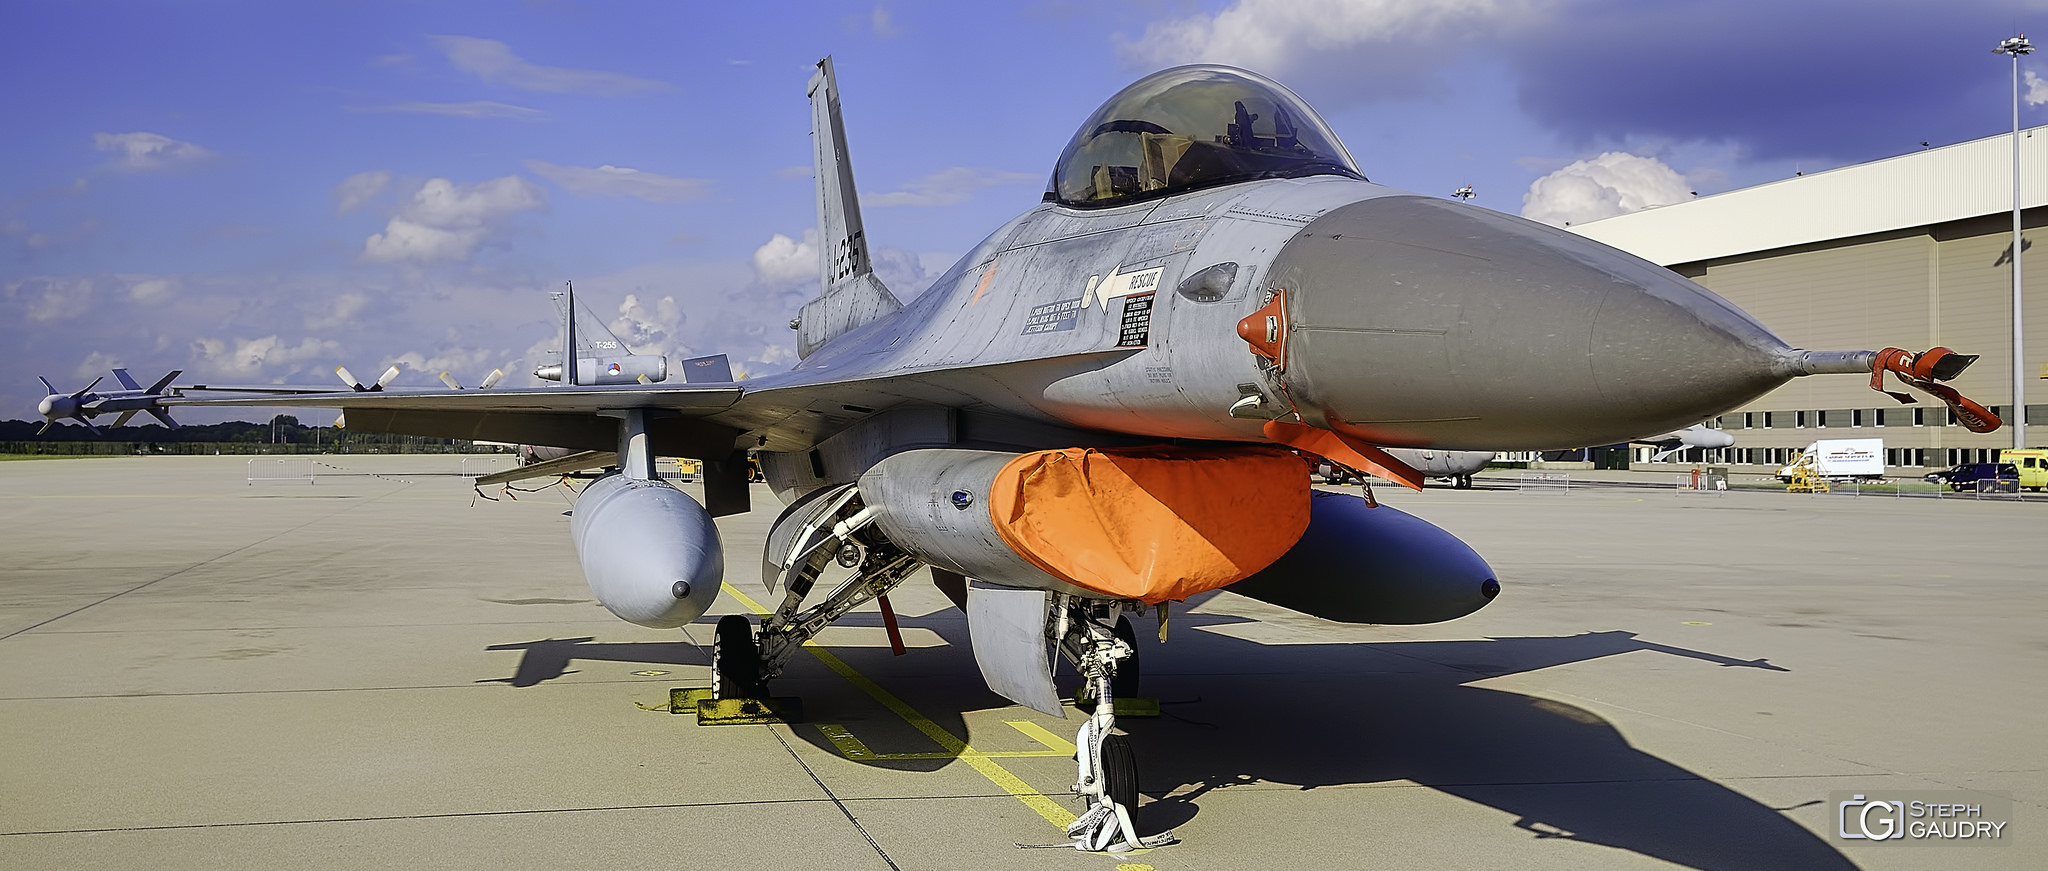 EHEH Airport / EHEH - F-16 Fighting Falcon